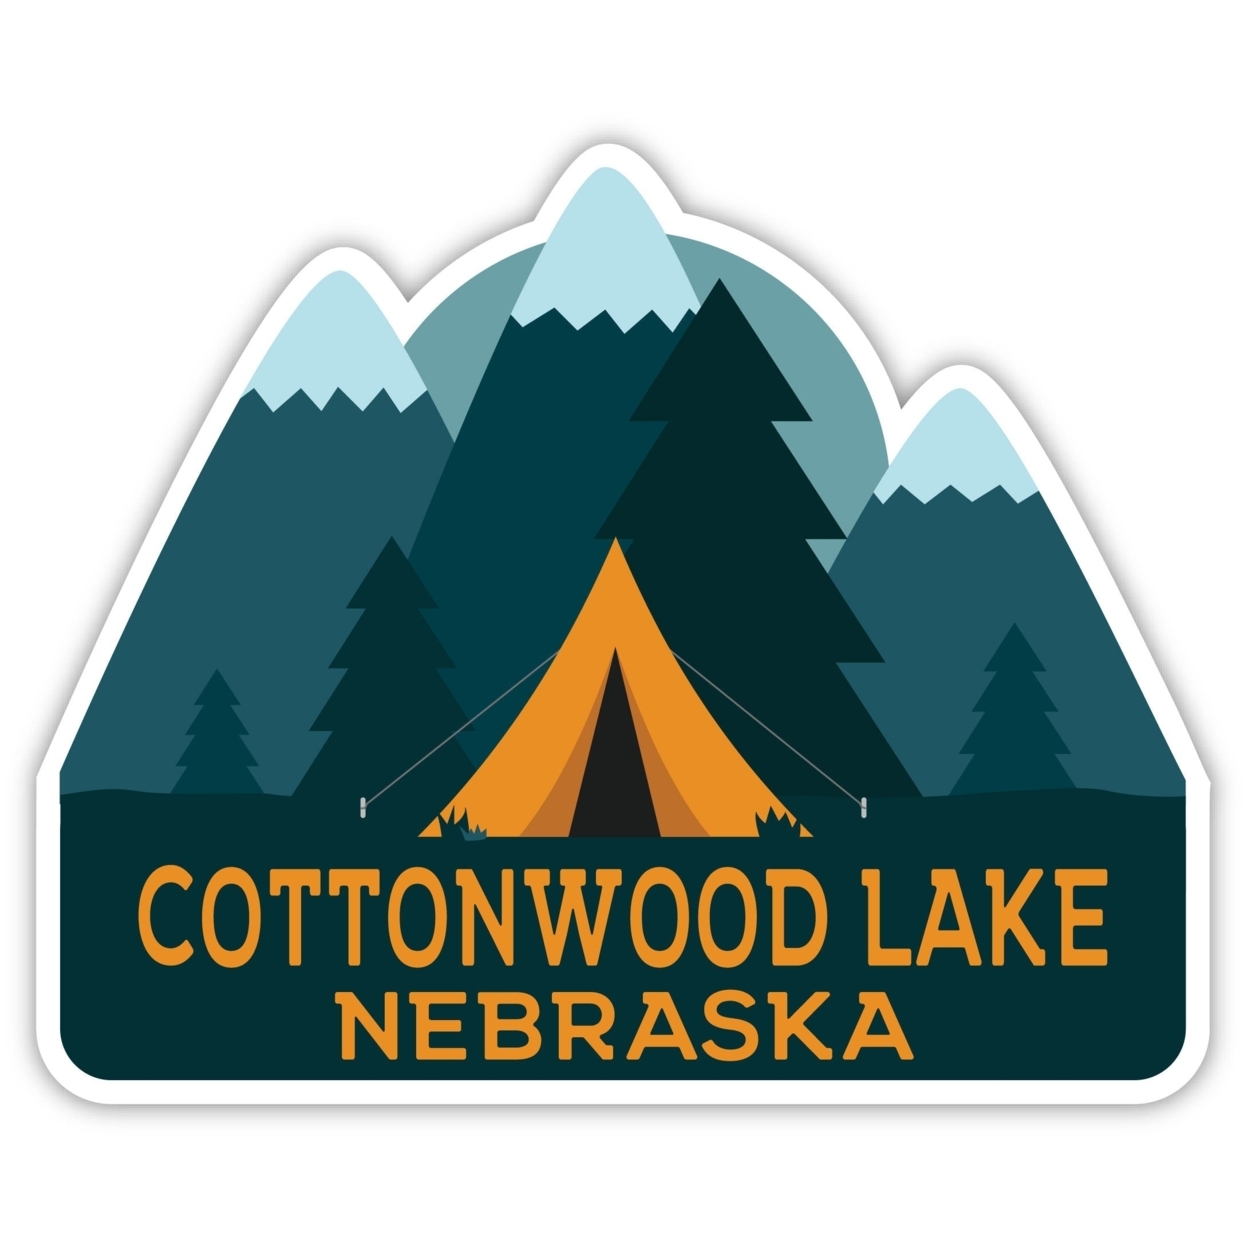 Cottonwood Lake Nebraska Souvenir Decorative Stickers (Choose Theme And Size) - 4-Pack, 4-Inch, Tent